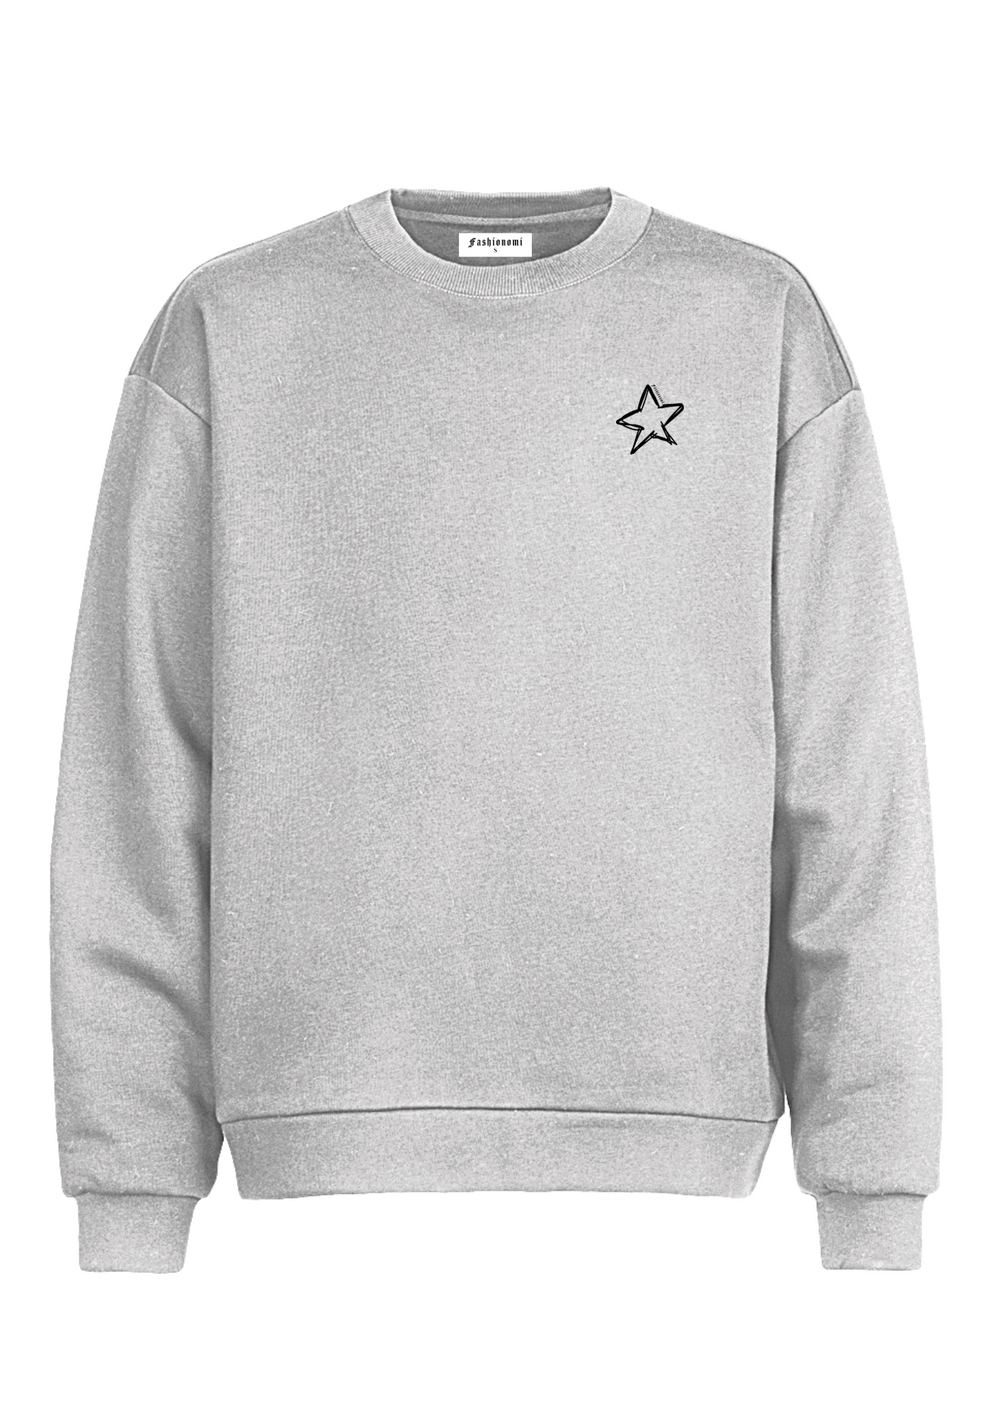 ★ Stargirl Babe Sweater